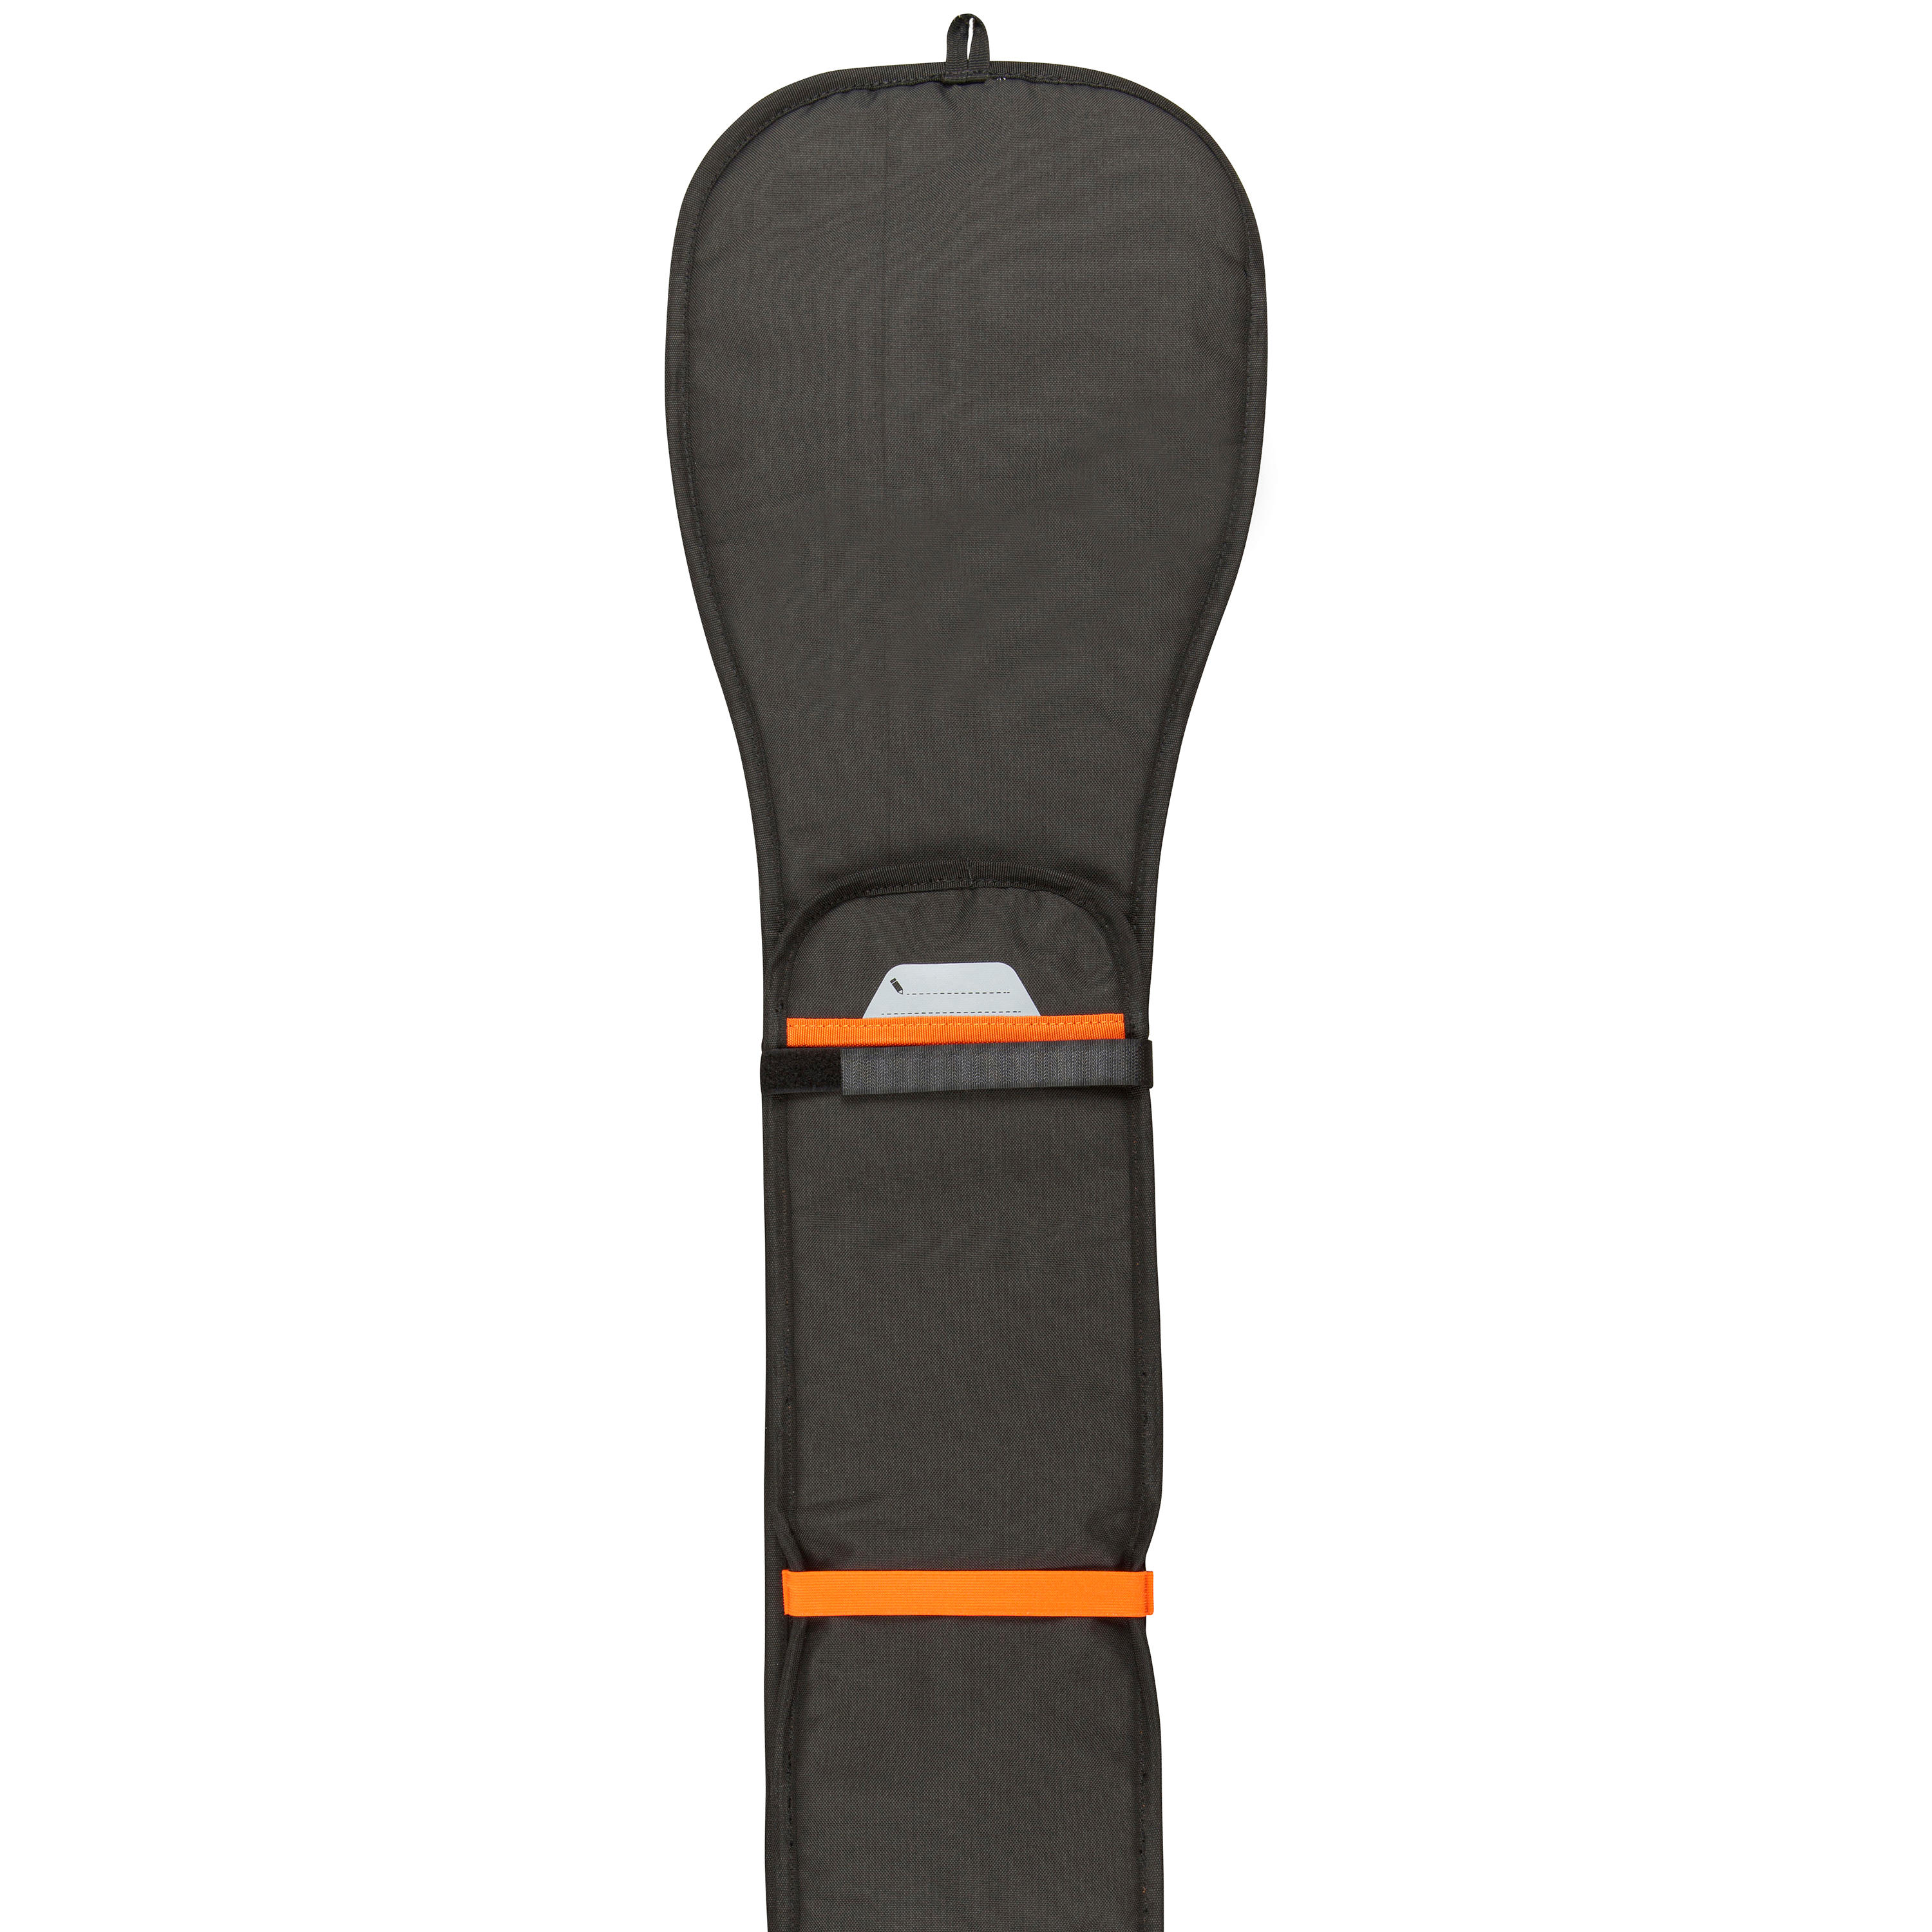 Adjustable Paddle Cover - Black - ITIWIT